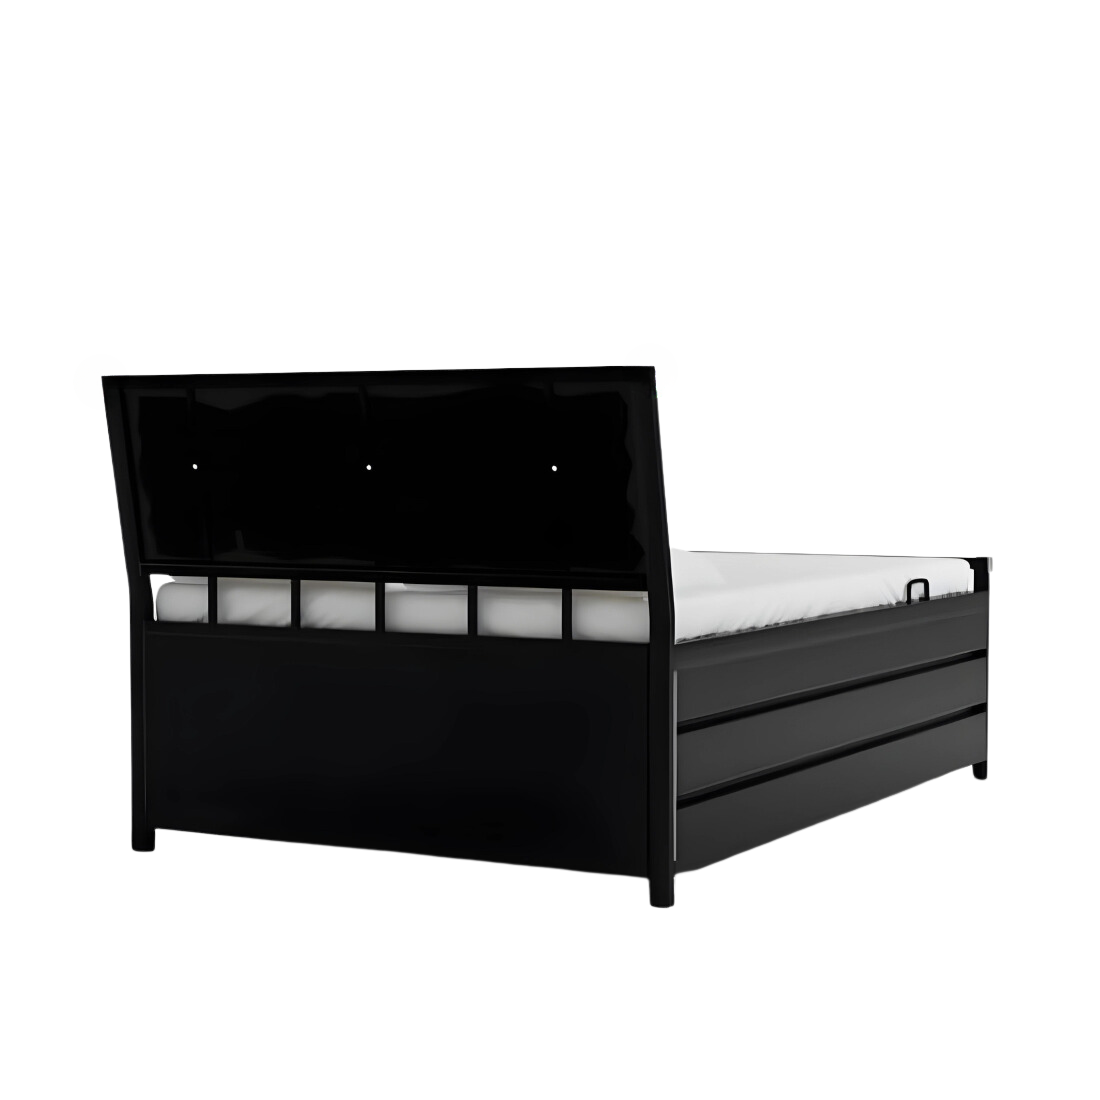 Heath Hydraulic Storage Queen Metal Bed with Golden Cushion Headrest (Color - Black)